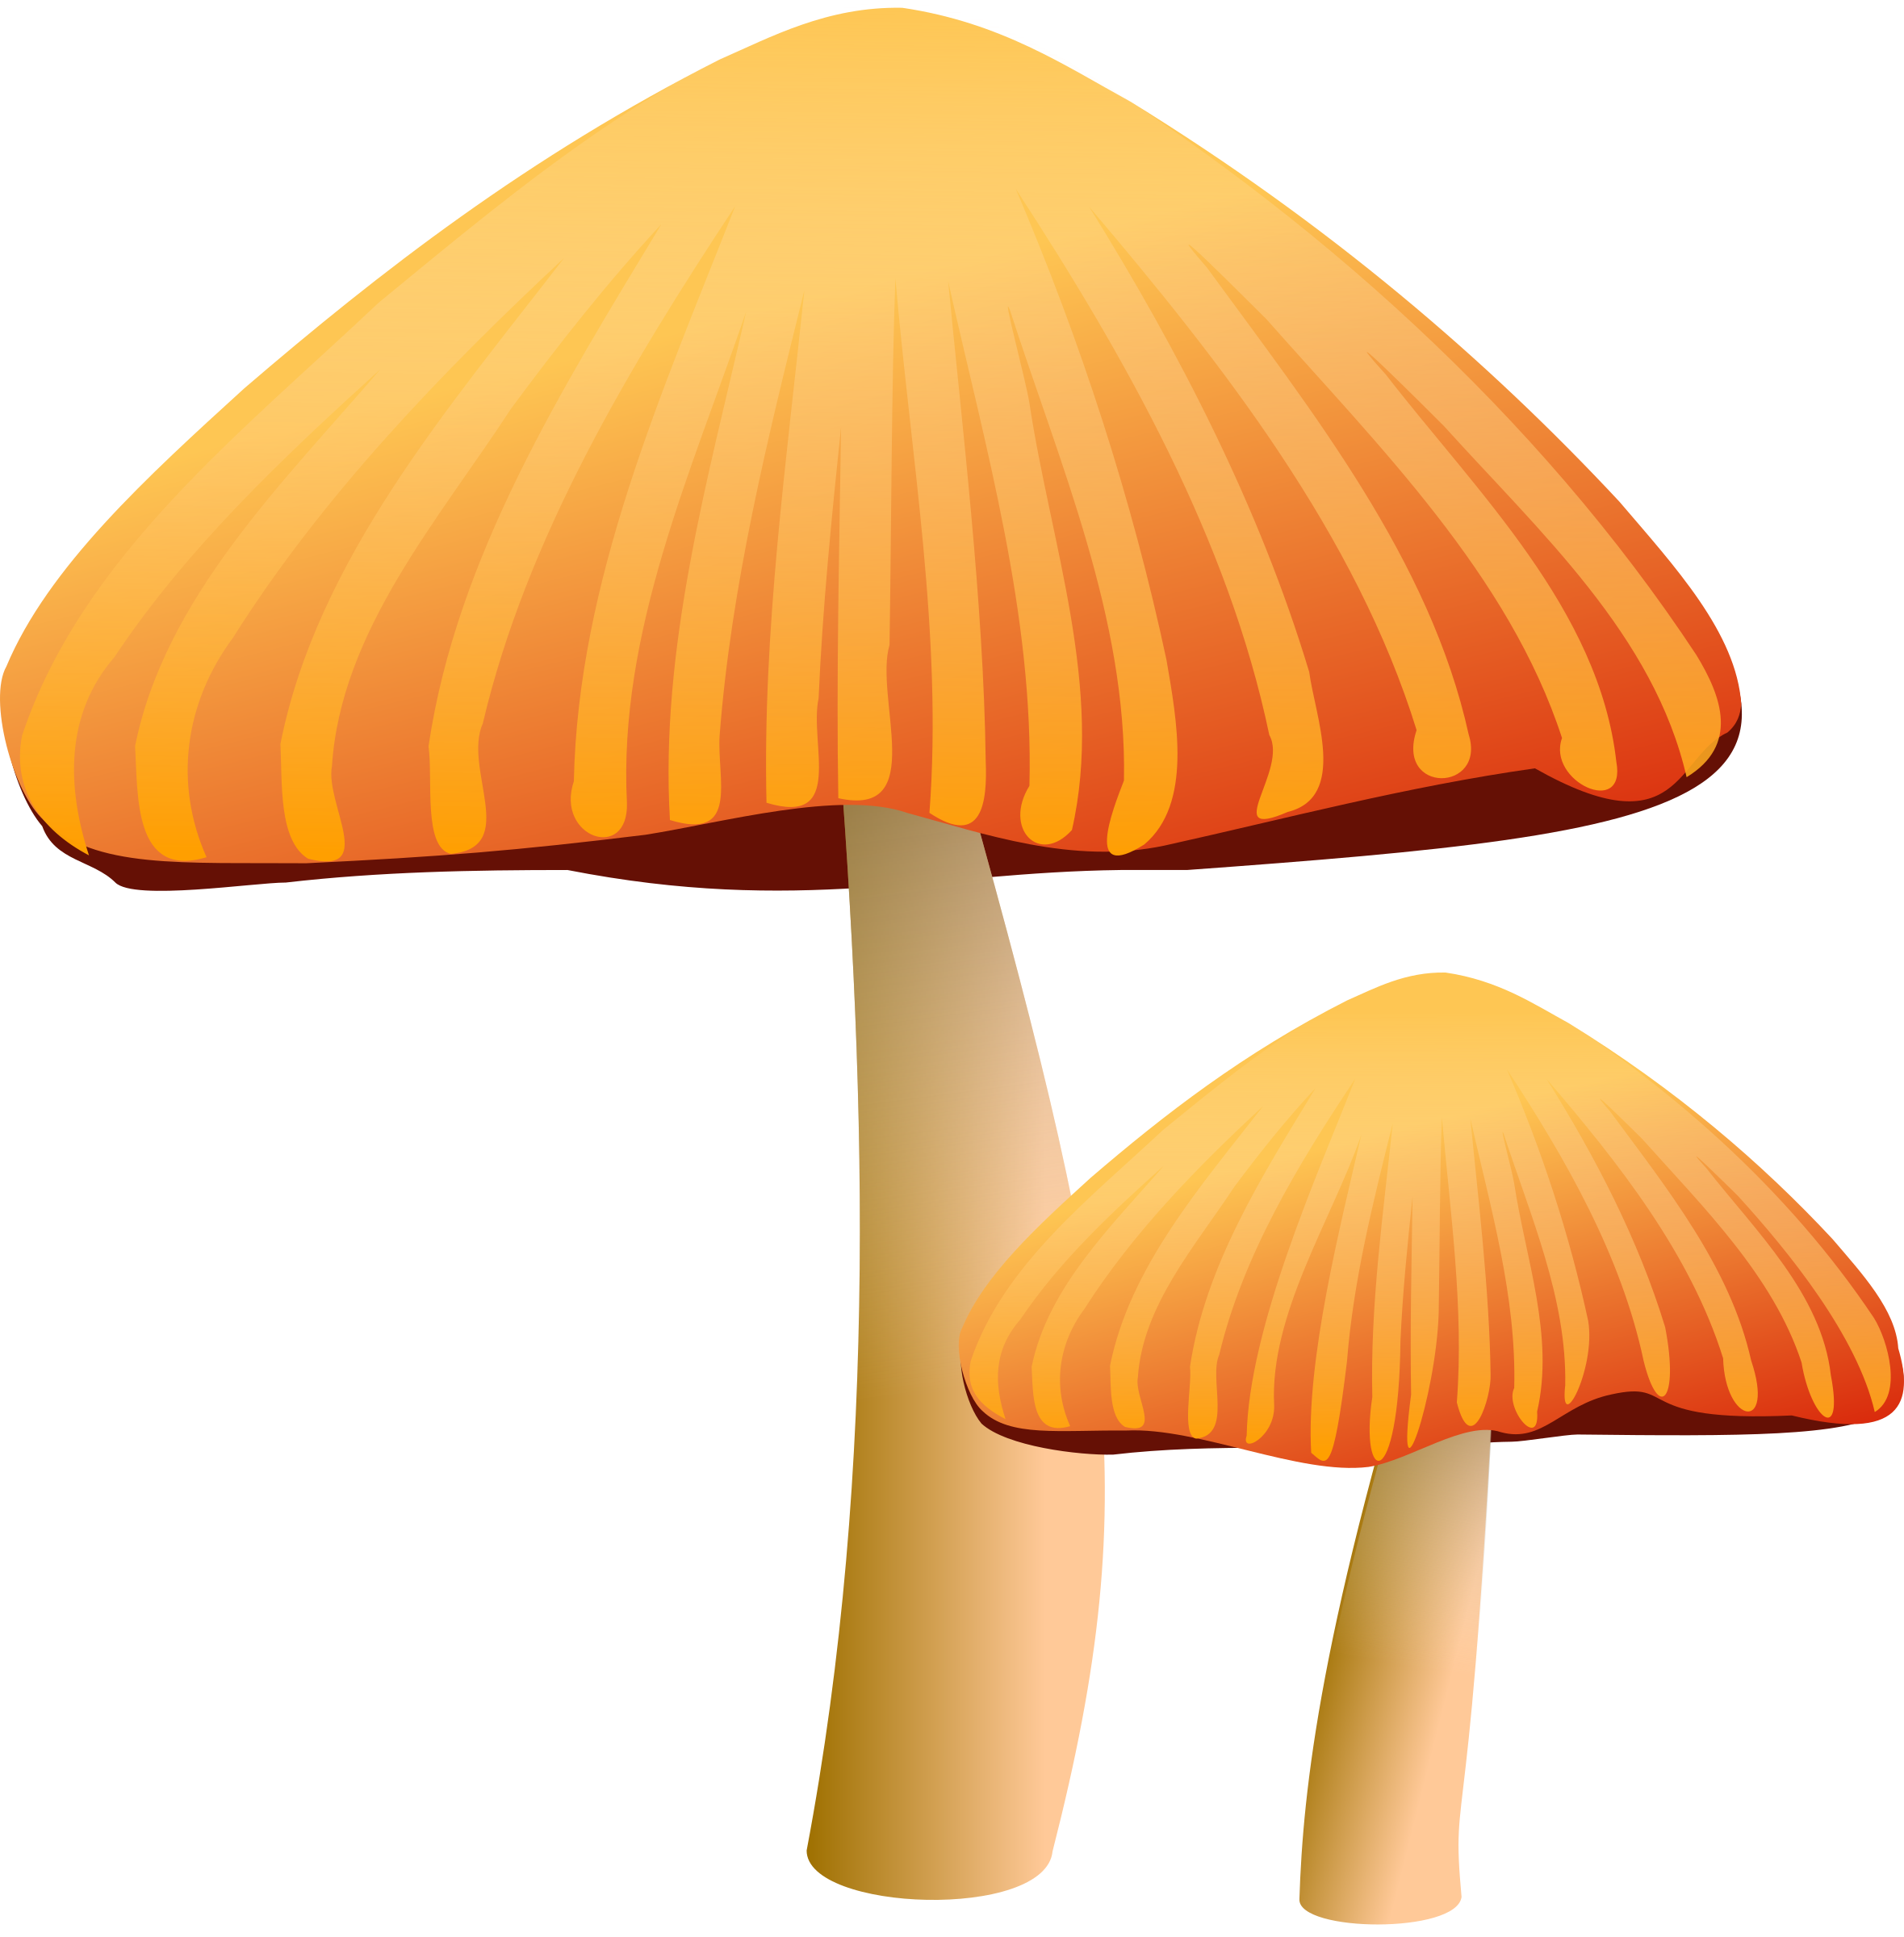 Clipart Orange Mushroom Image Png Clipart